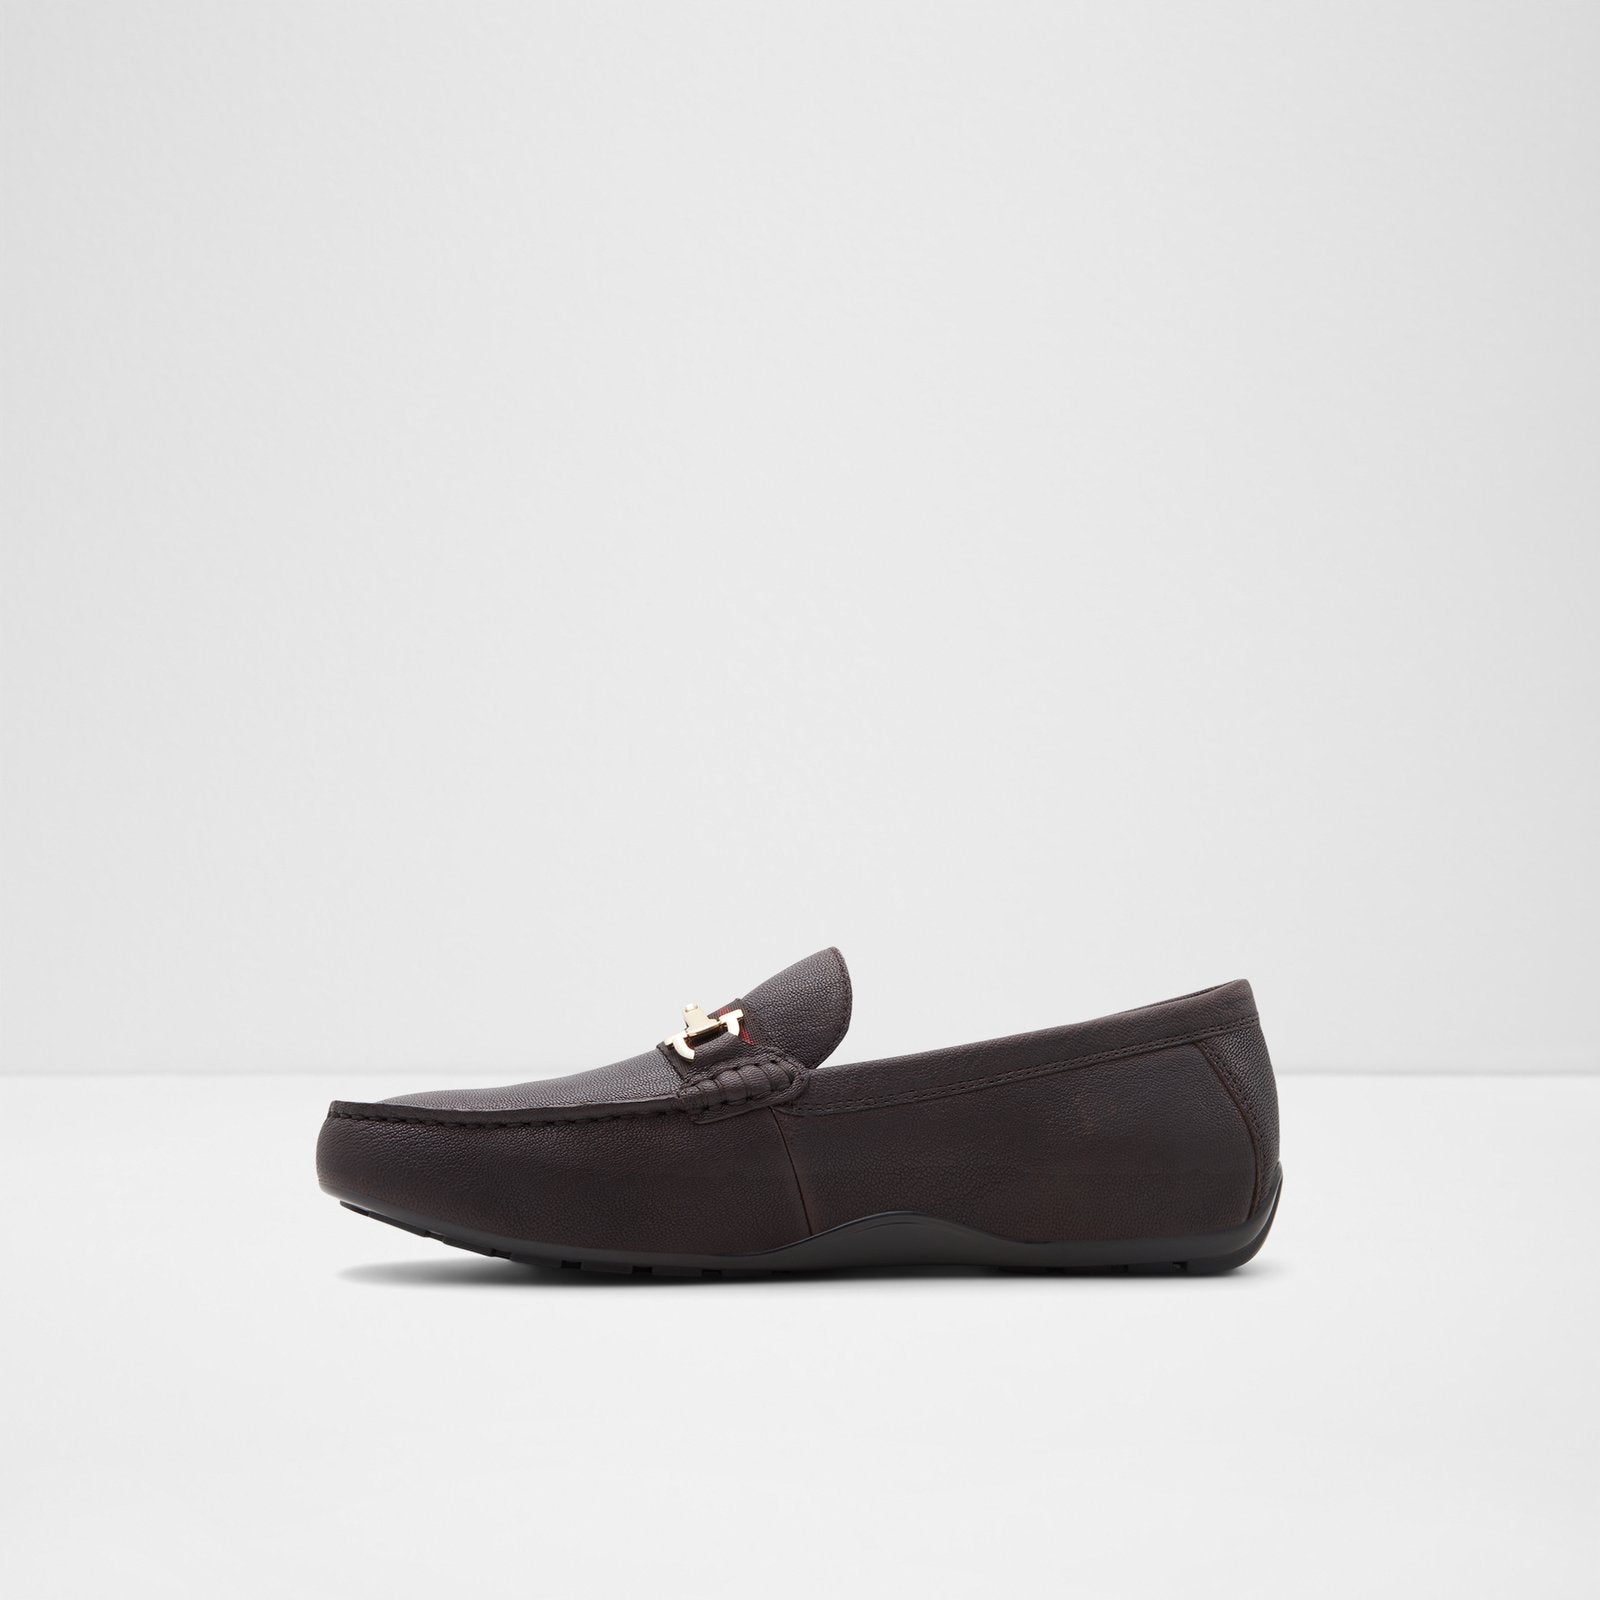 Fangio / Slip Ons Men Shoes - Dark Brown - ALDO KSA